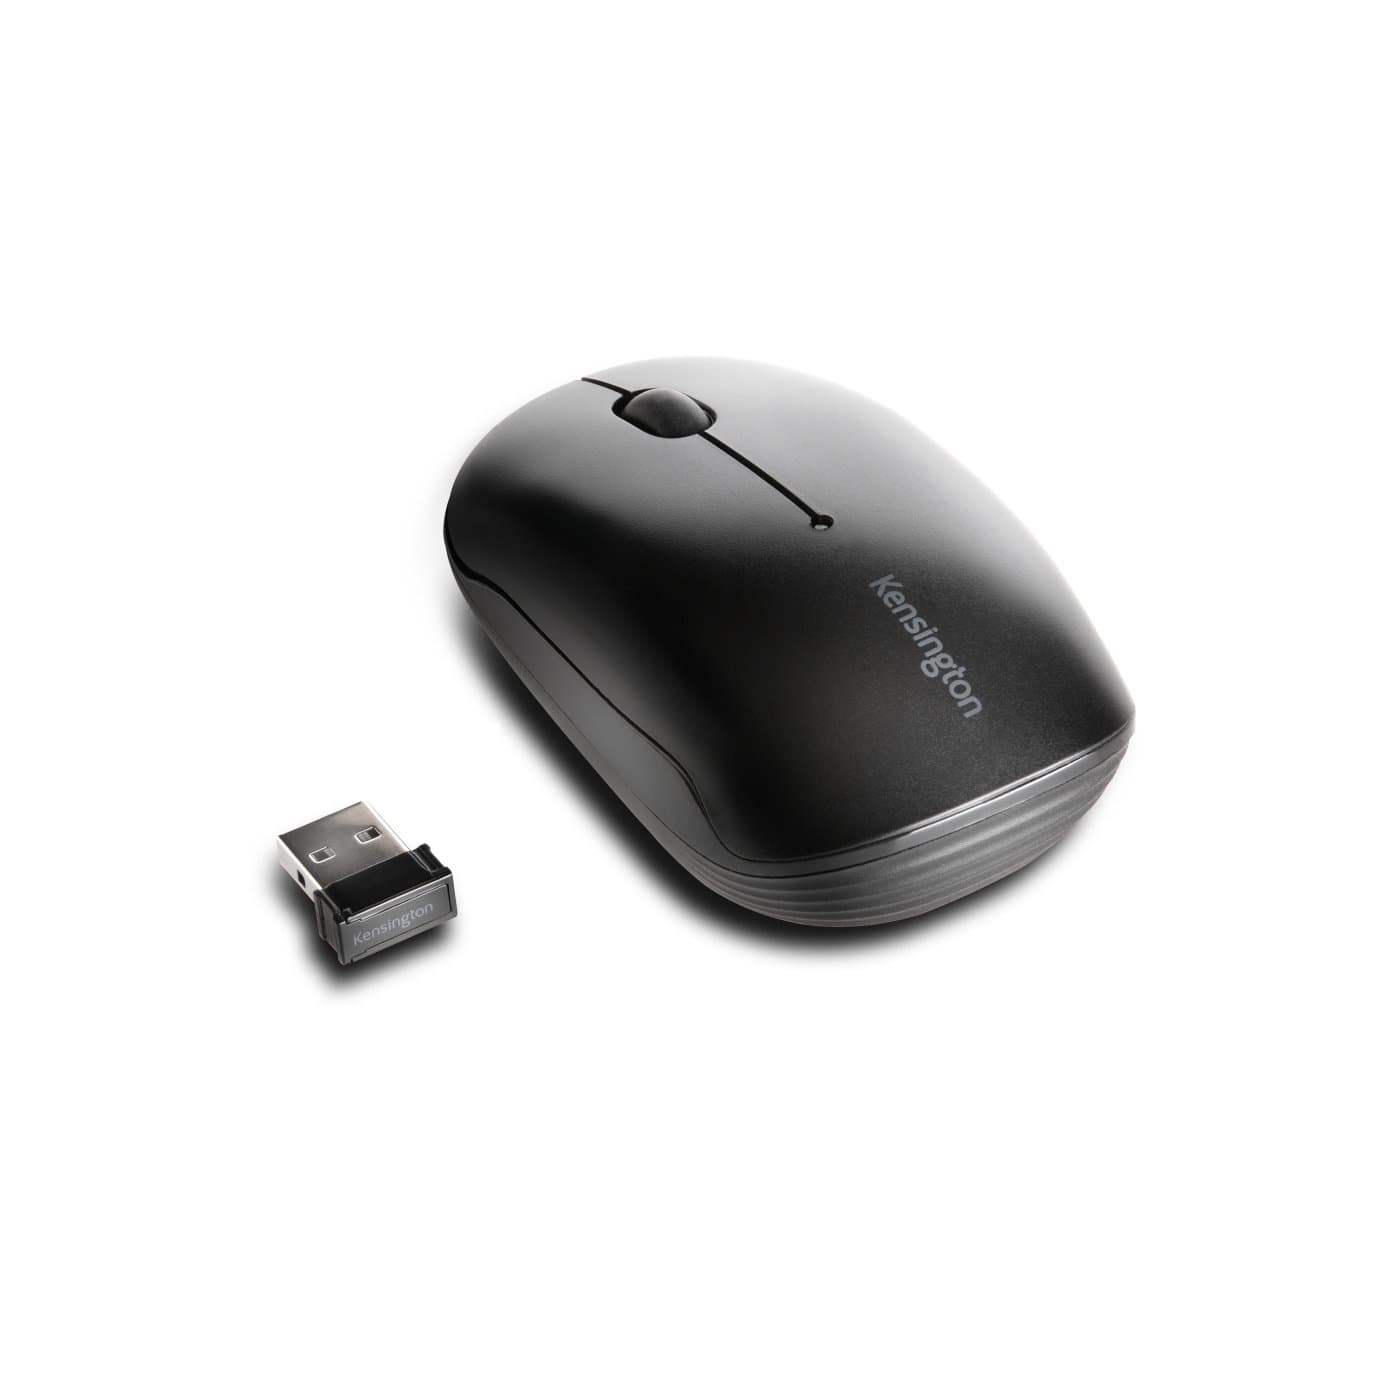 Kensington Pocket Mouse Driver For Mac